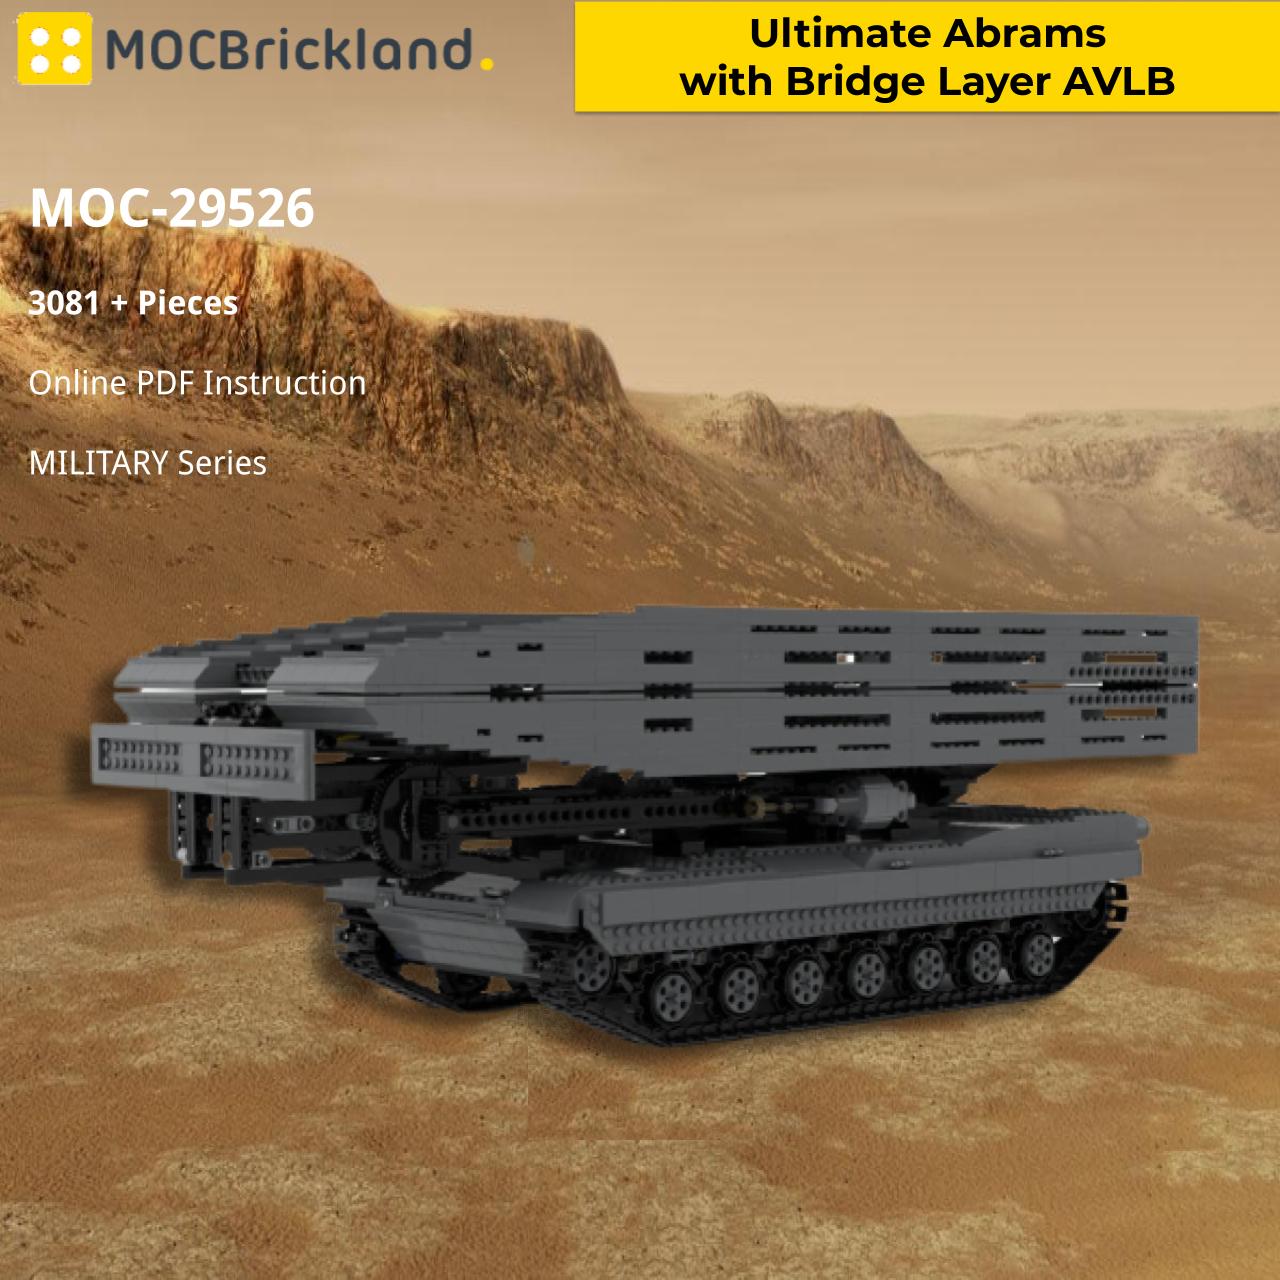 MOCBRICKLAND MOC-29526 Ultimate Abrams with Bridge Layer AVLB